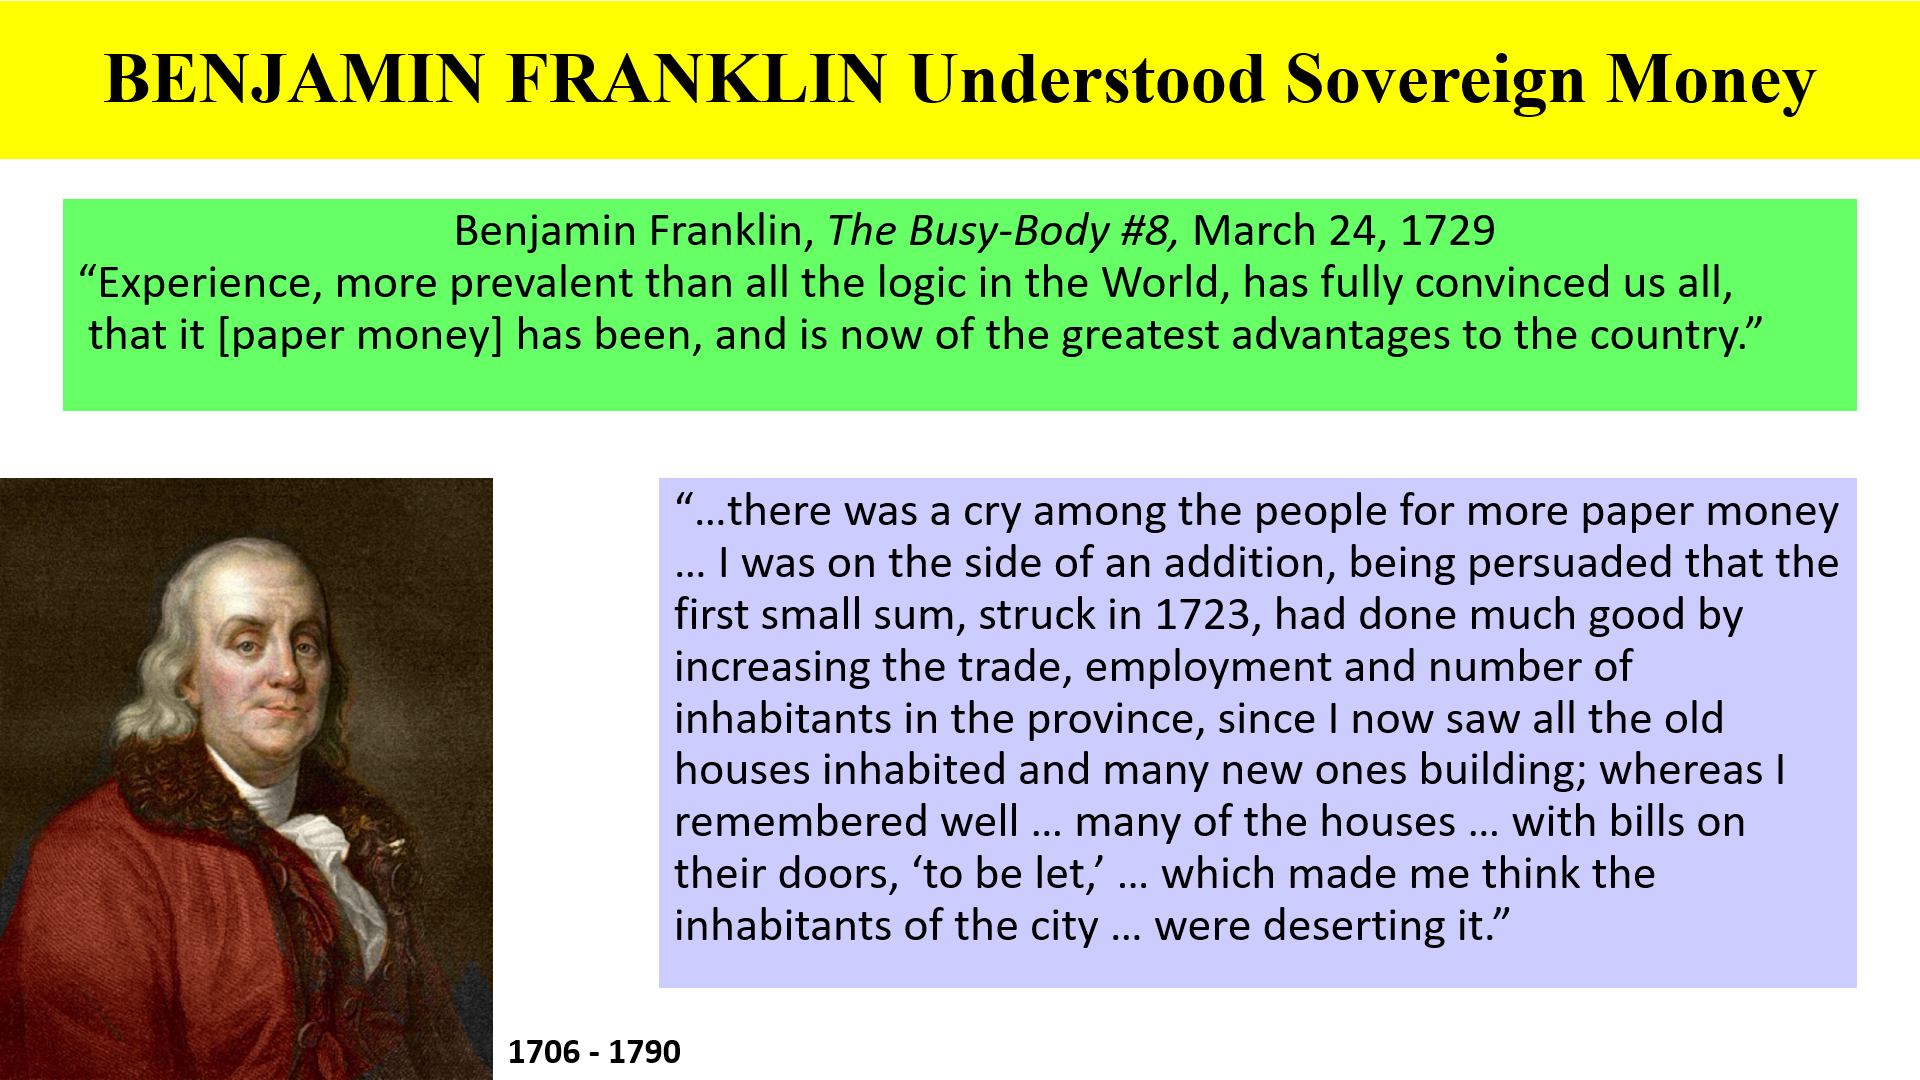 Part 4: Benjamin Franklin understood sovereign money